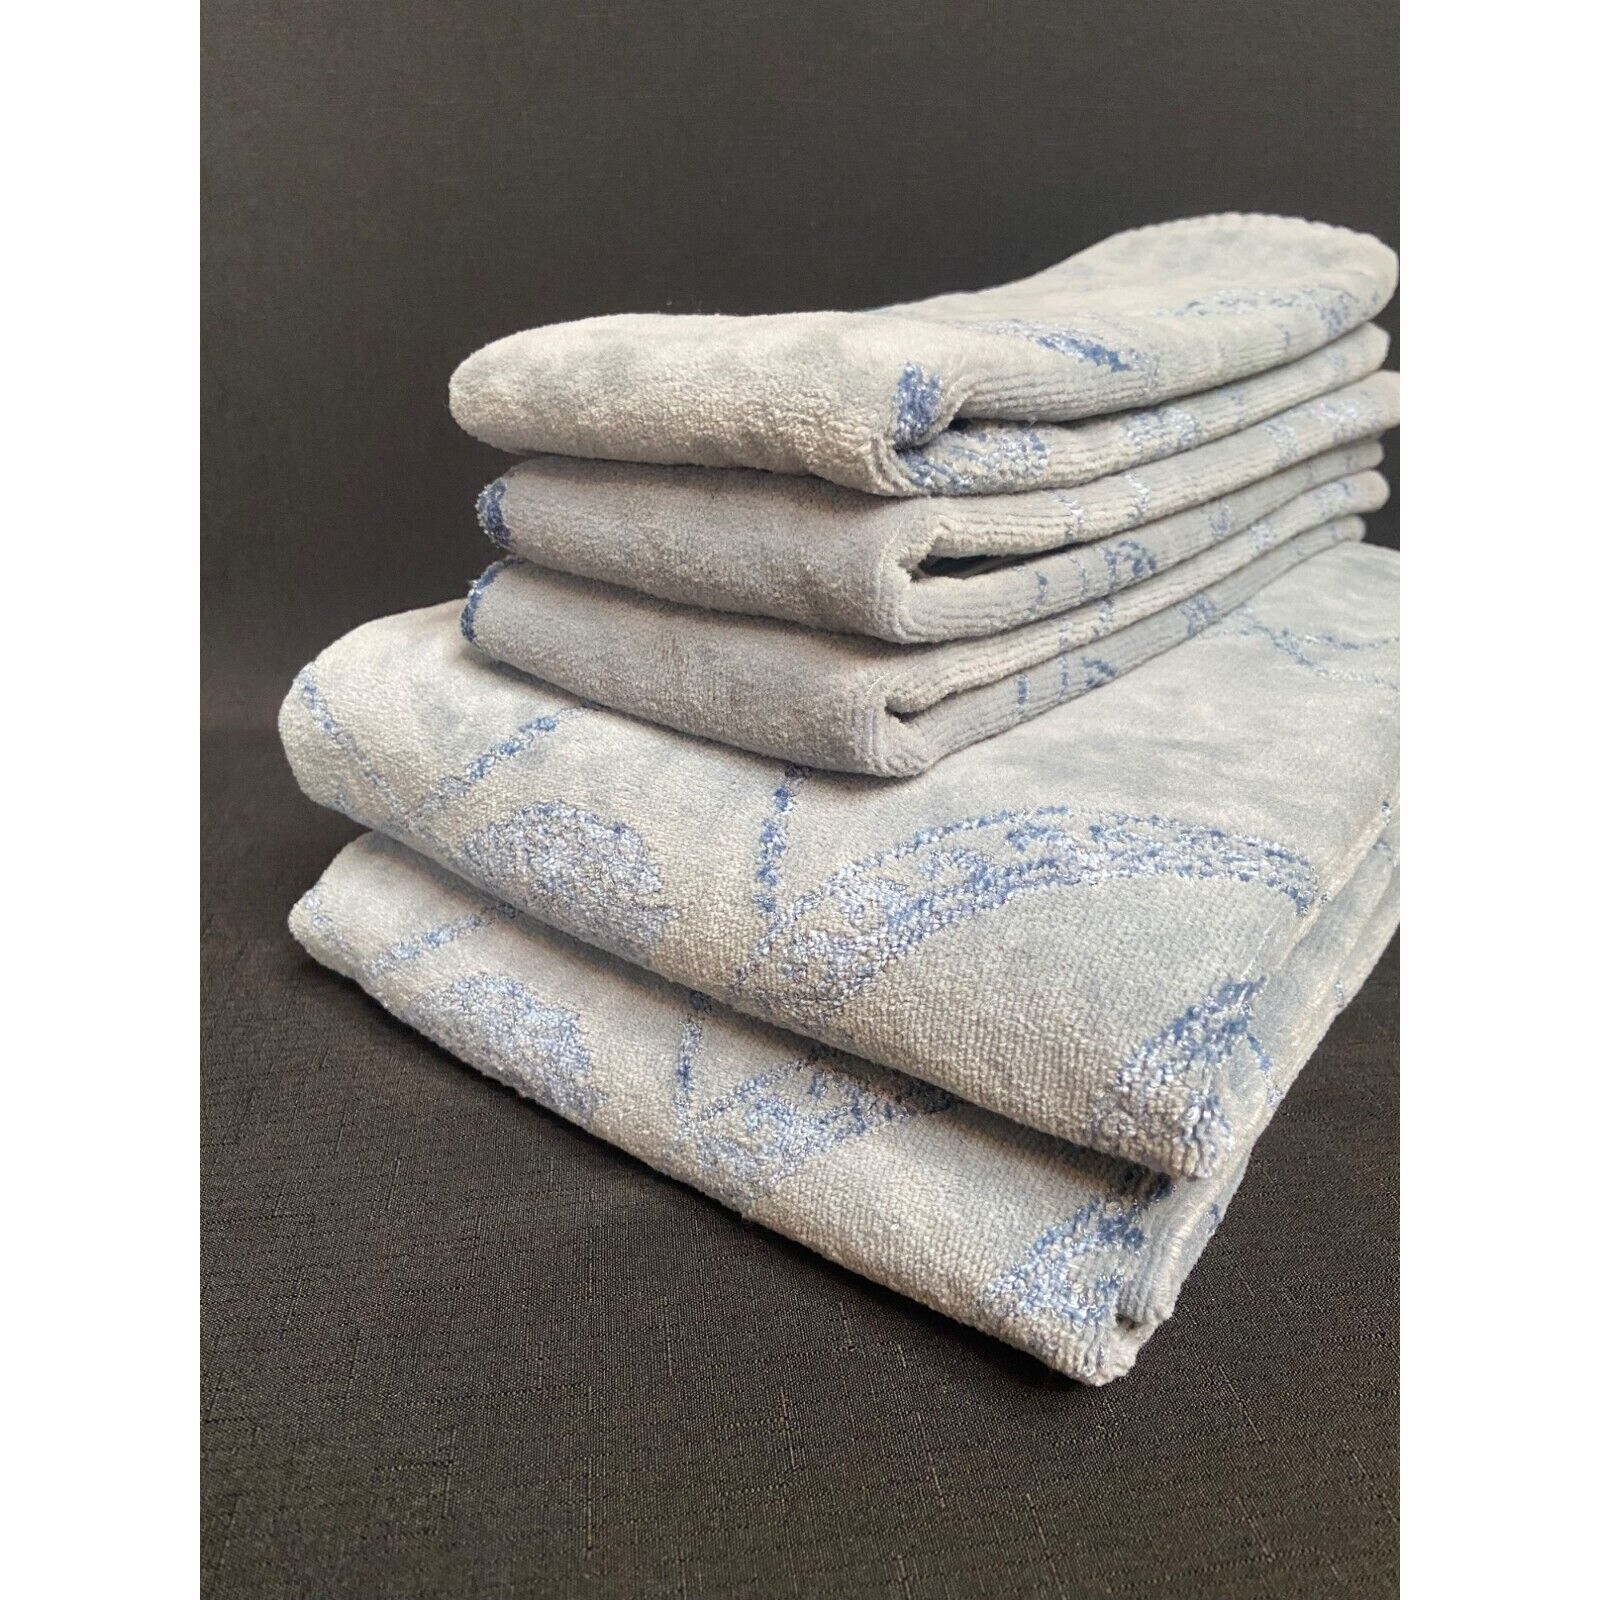 BESANA Italian Towels 2 Bath towels and 3 hand towels set of 5 Blue/Gray vintage